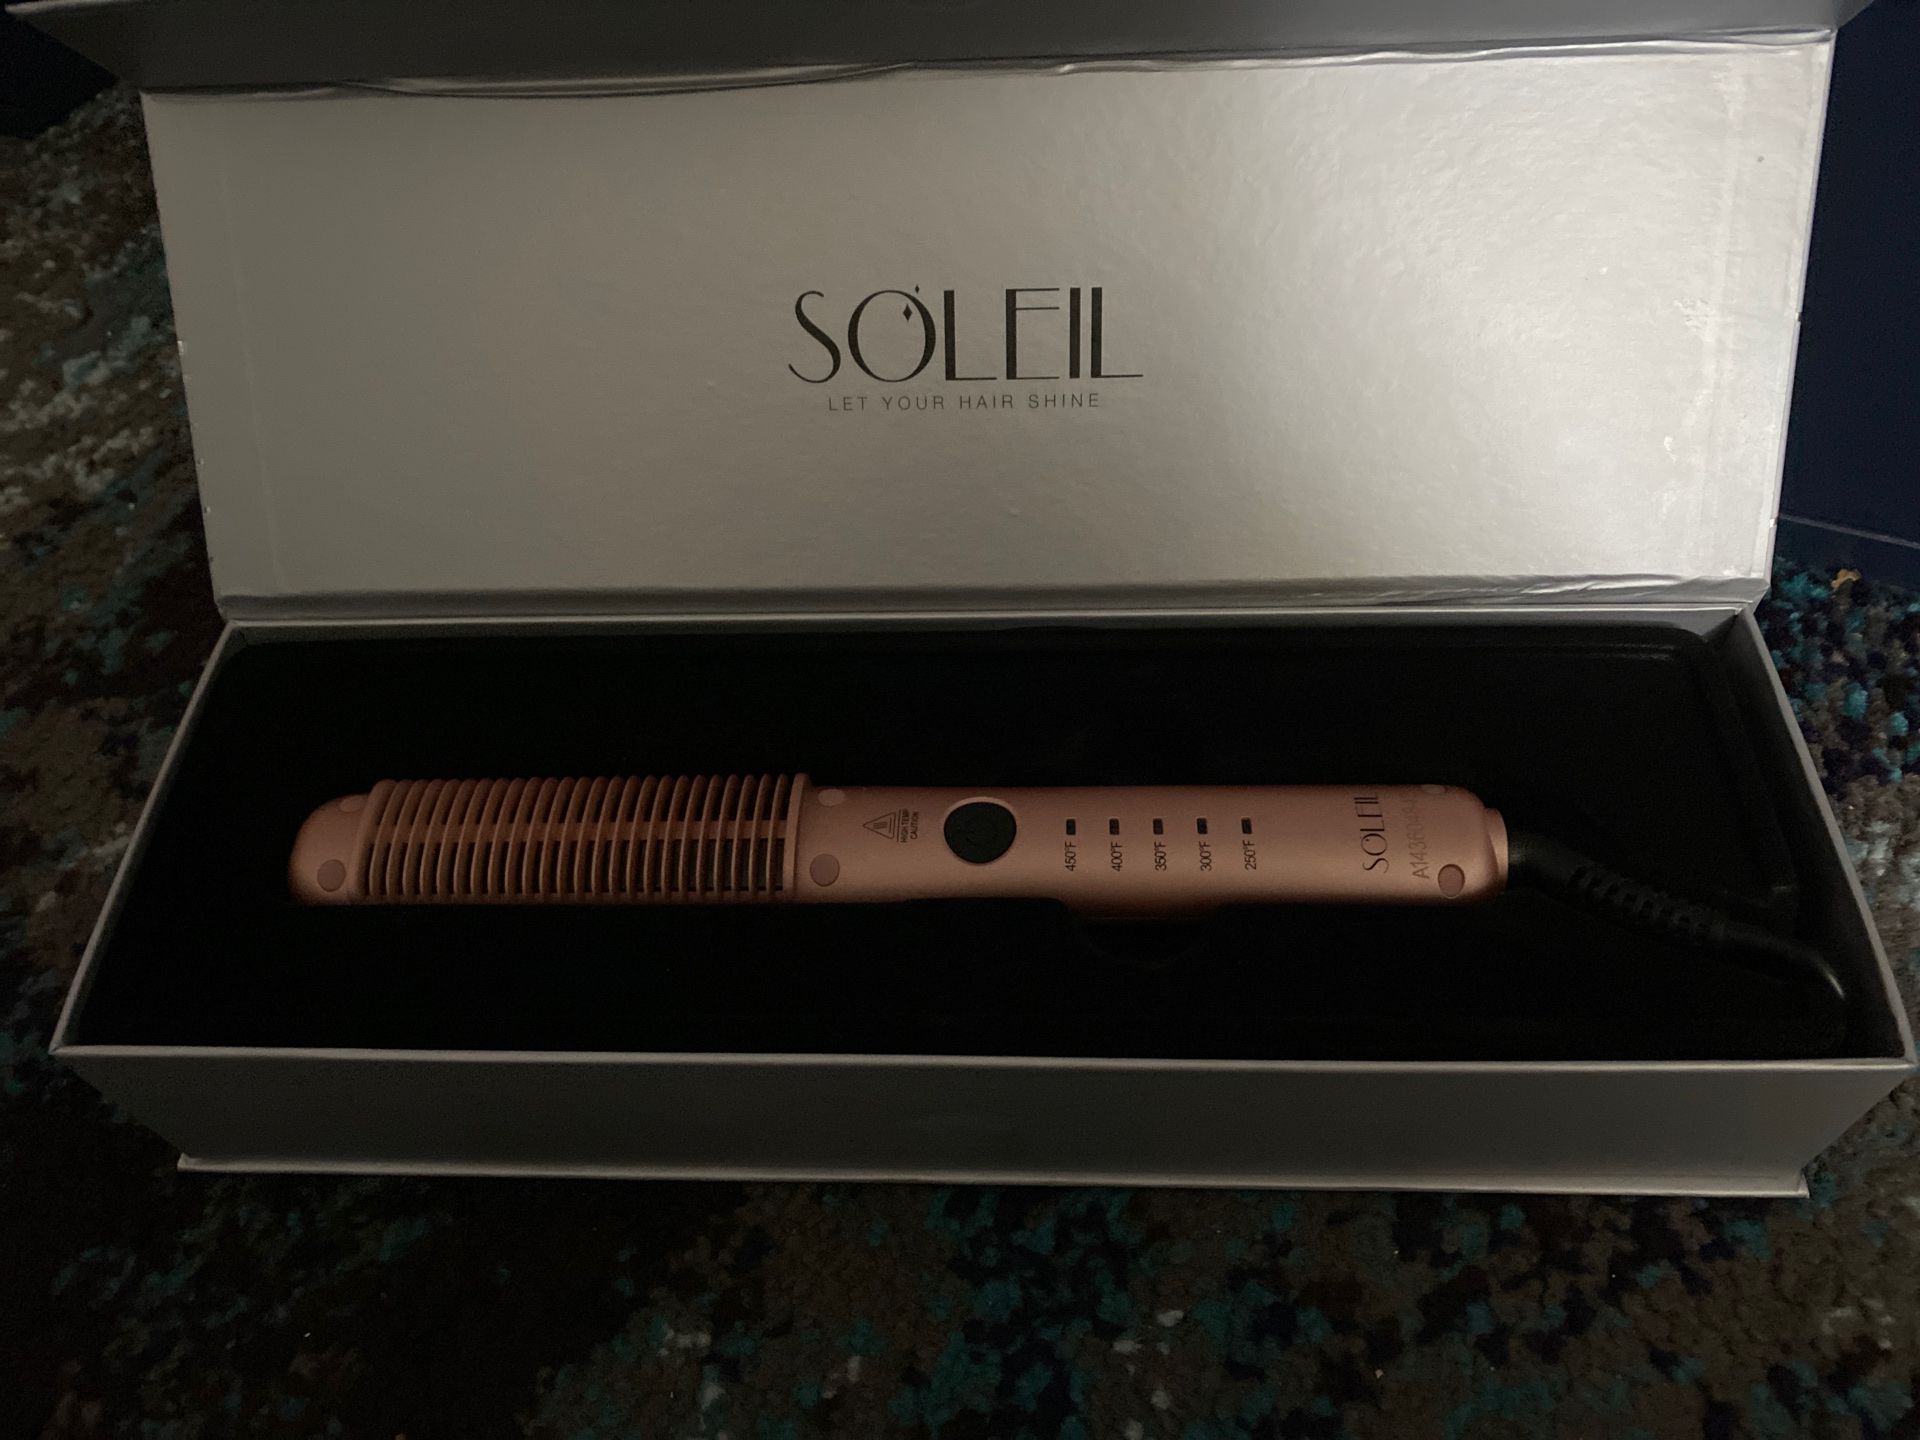 Soleil styling comb/ straightener